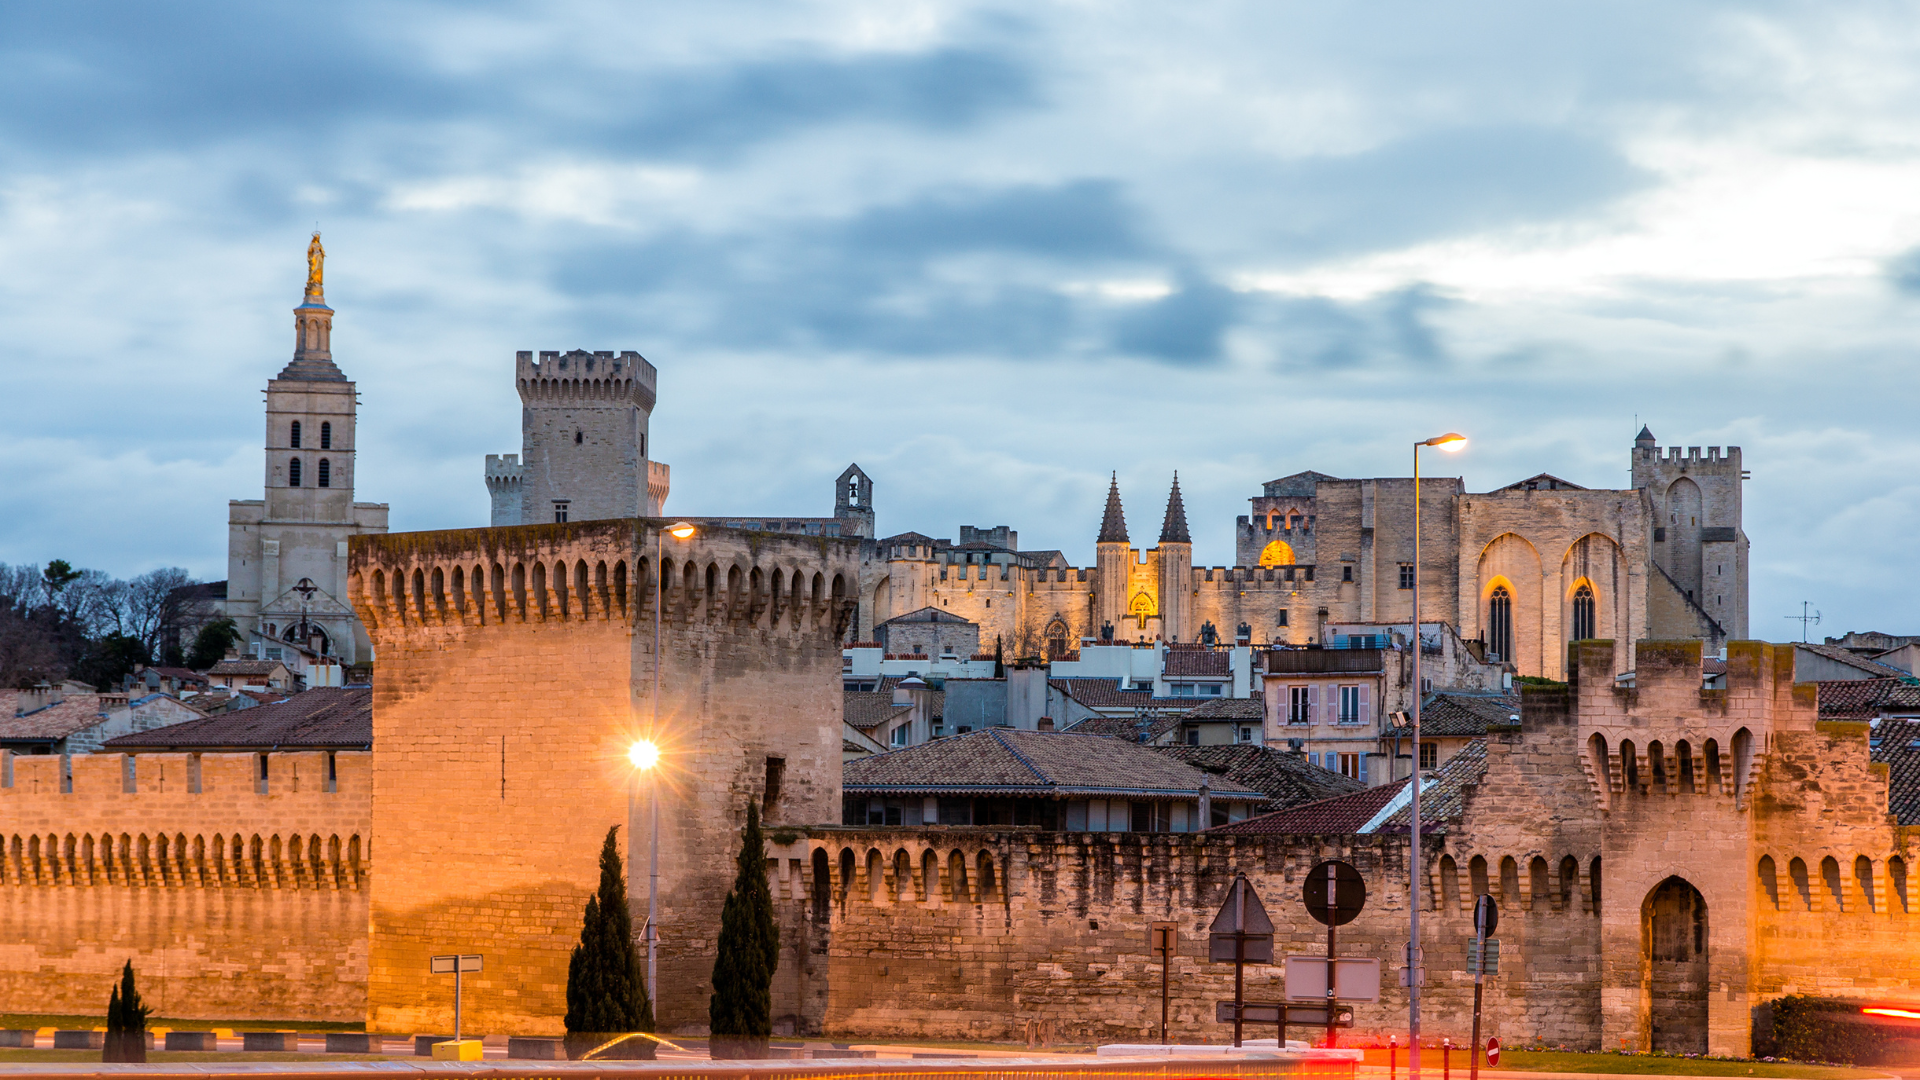 Visit Avignon's old town